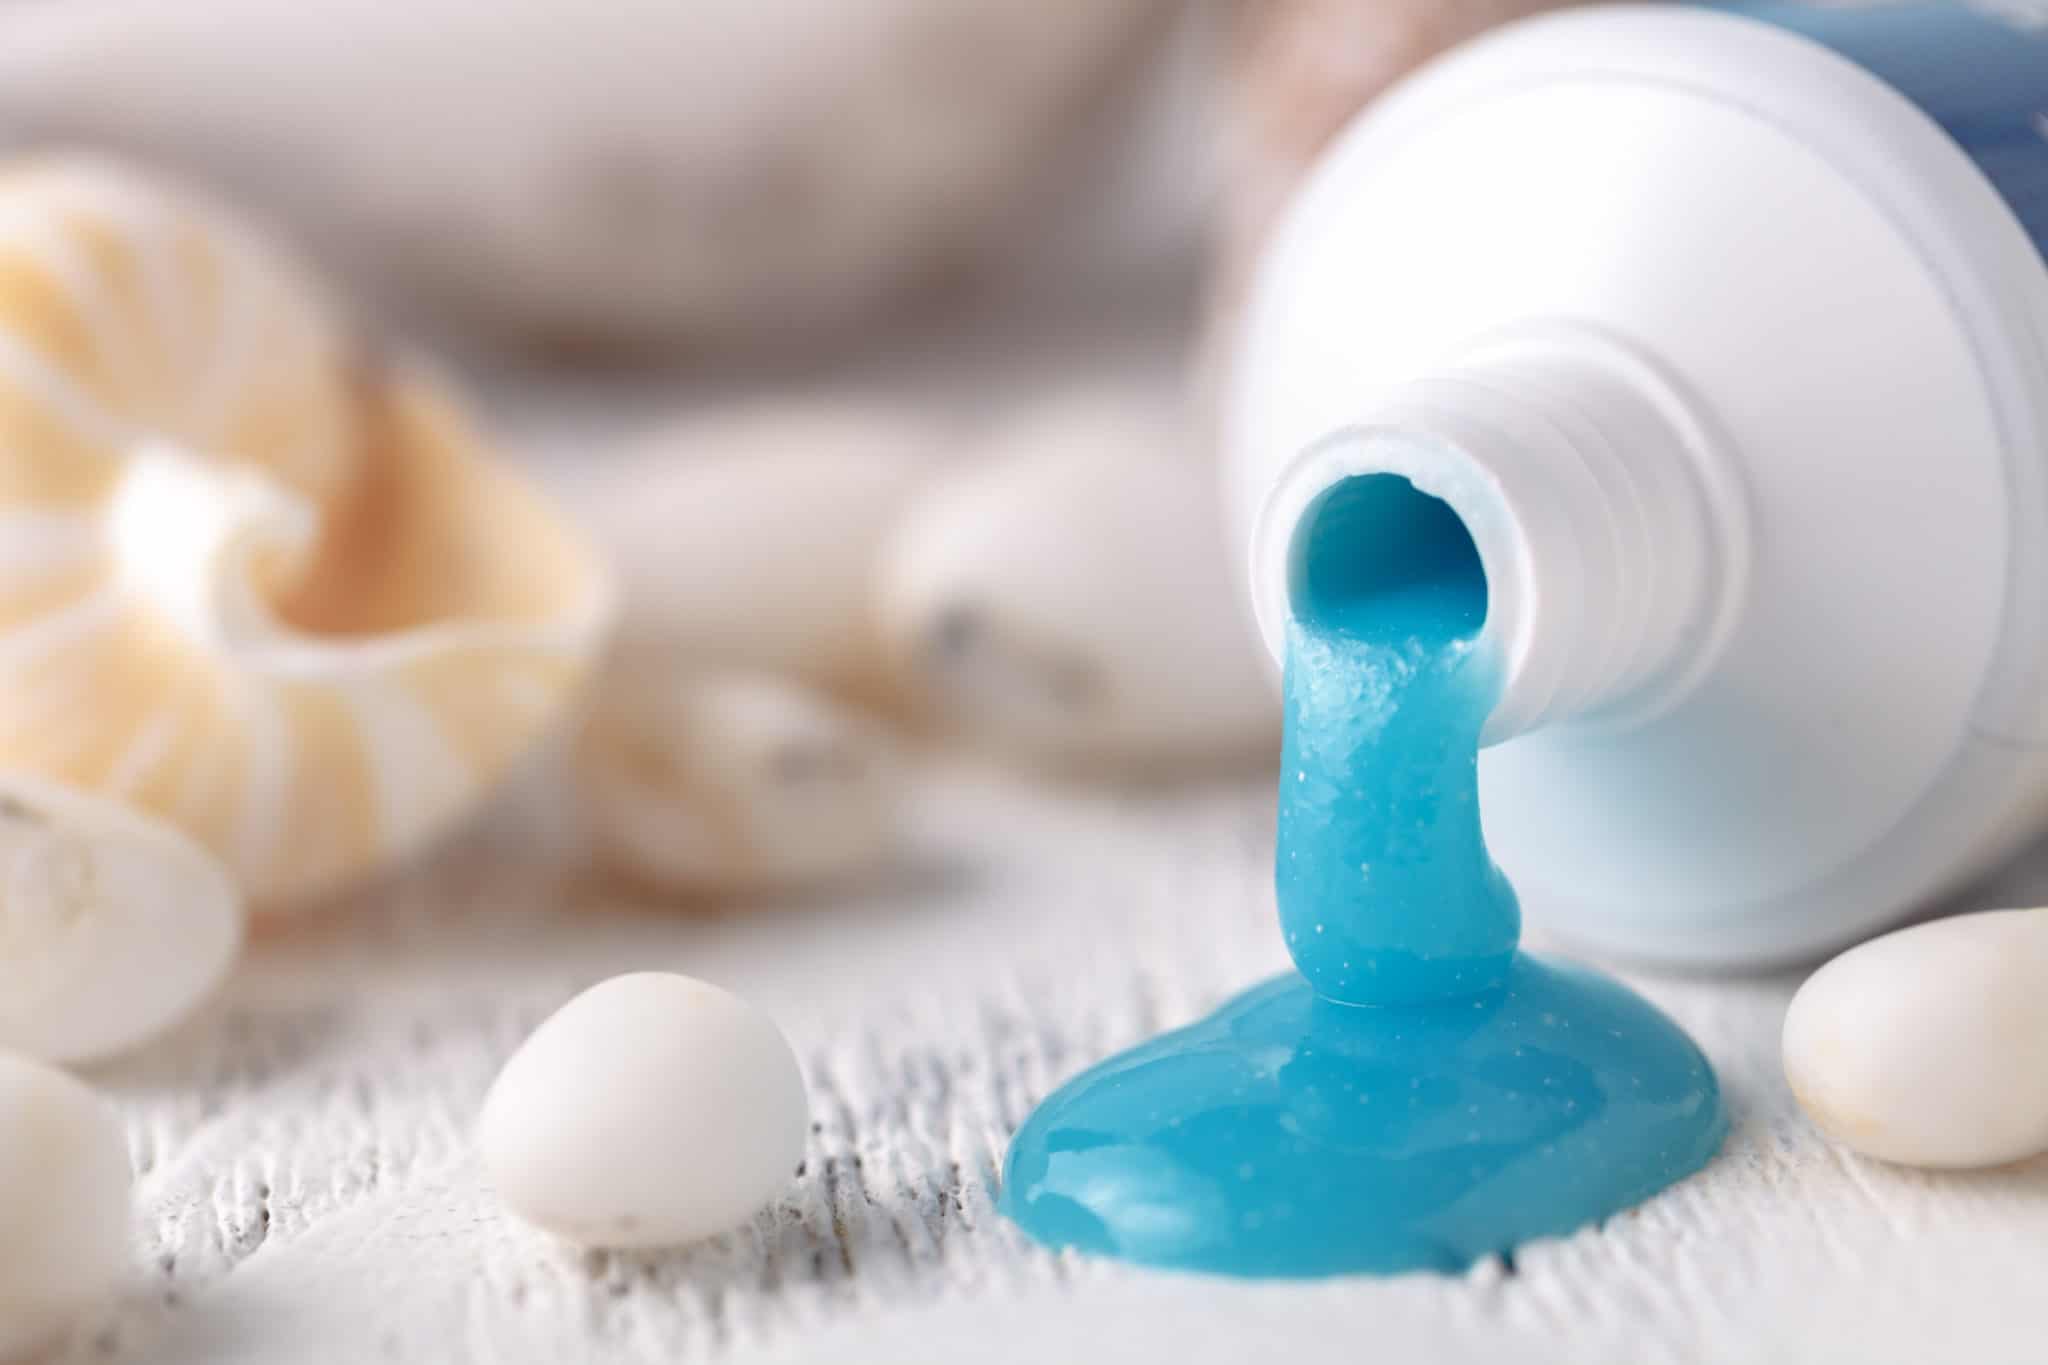 stannous fluoride vs sodium fluoride toothpaste featured image